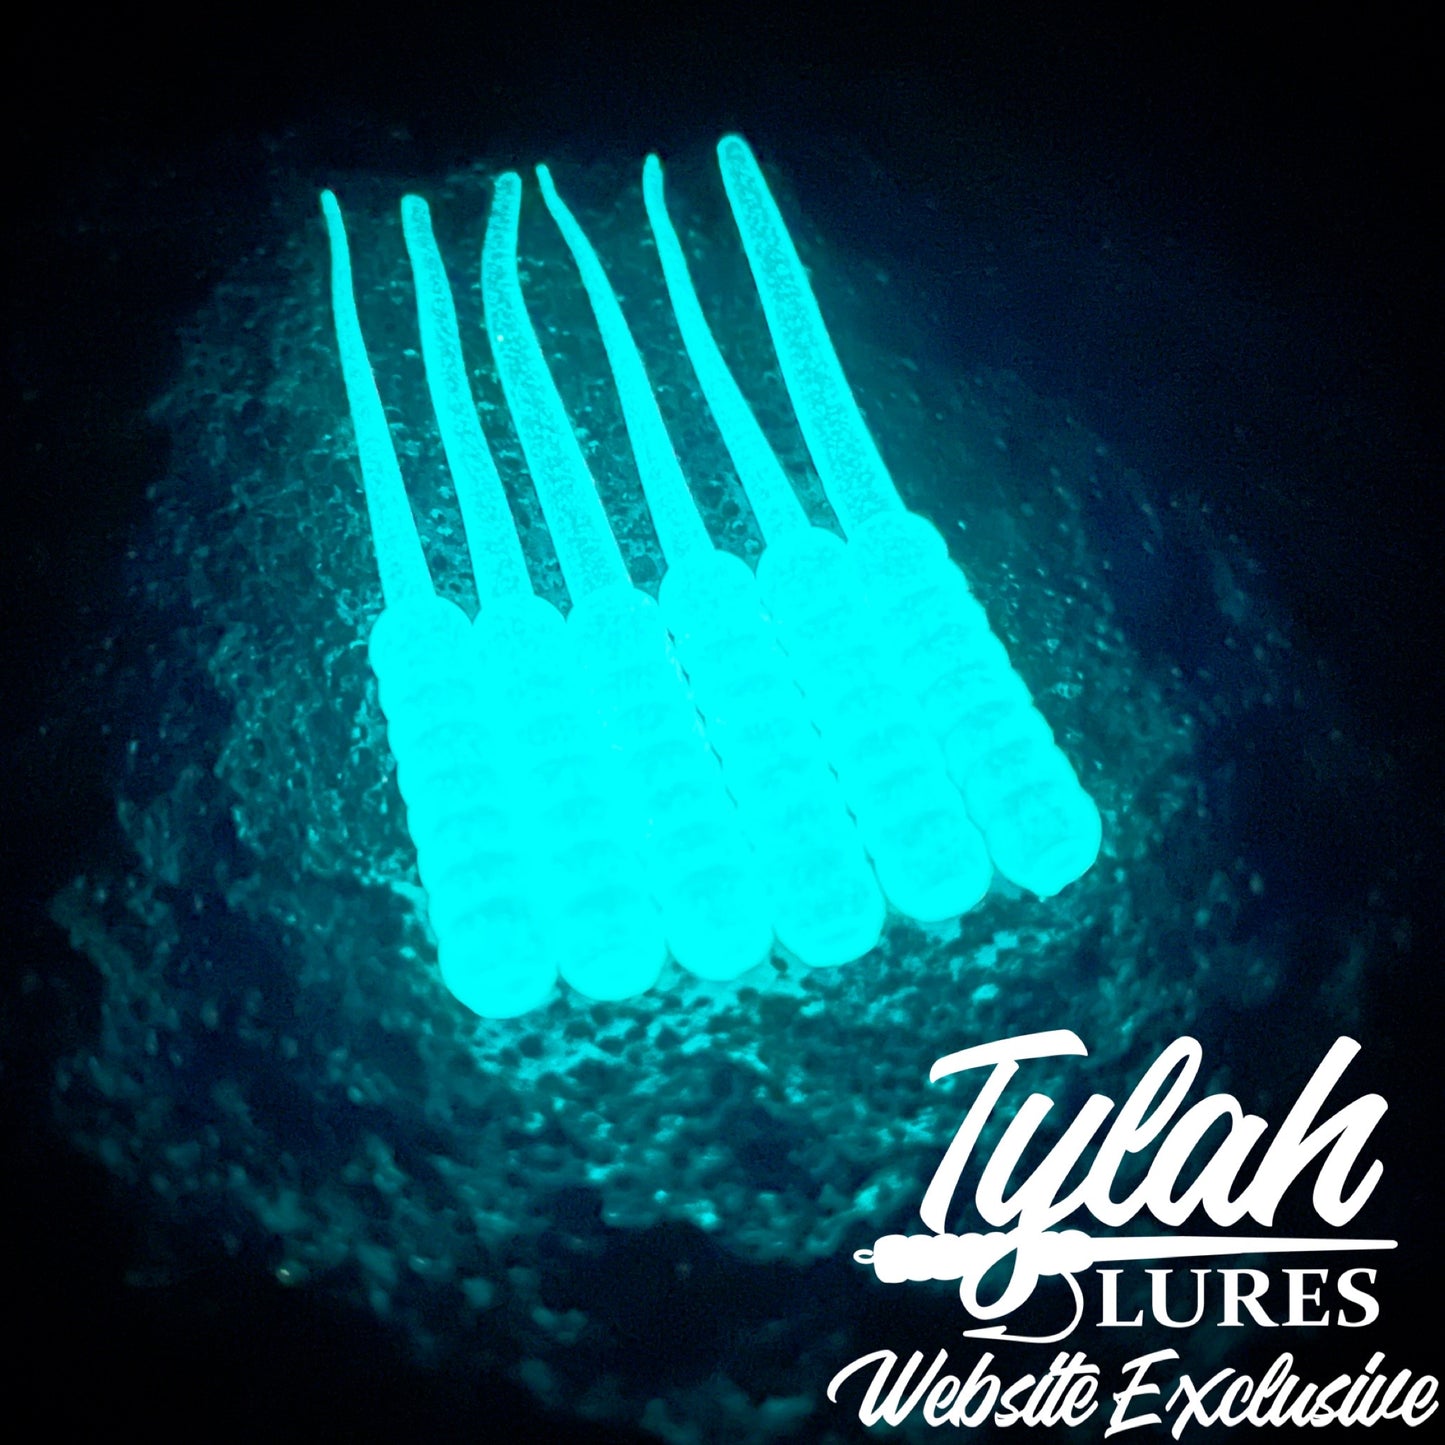 TylahLures Website Exclusive UV Blue Glow 2in.